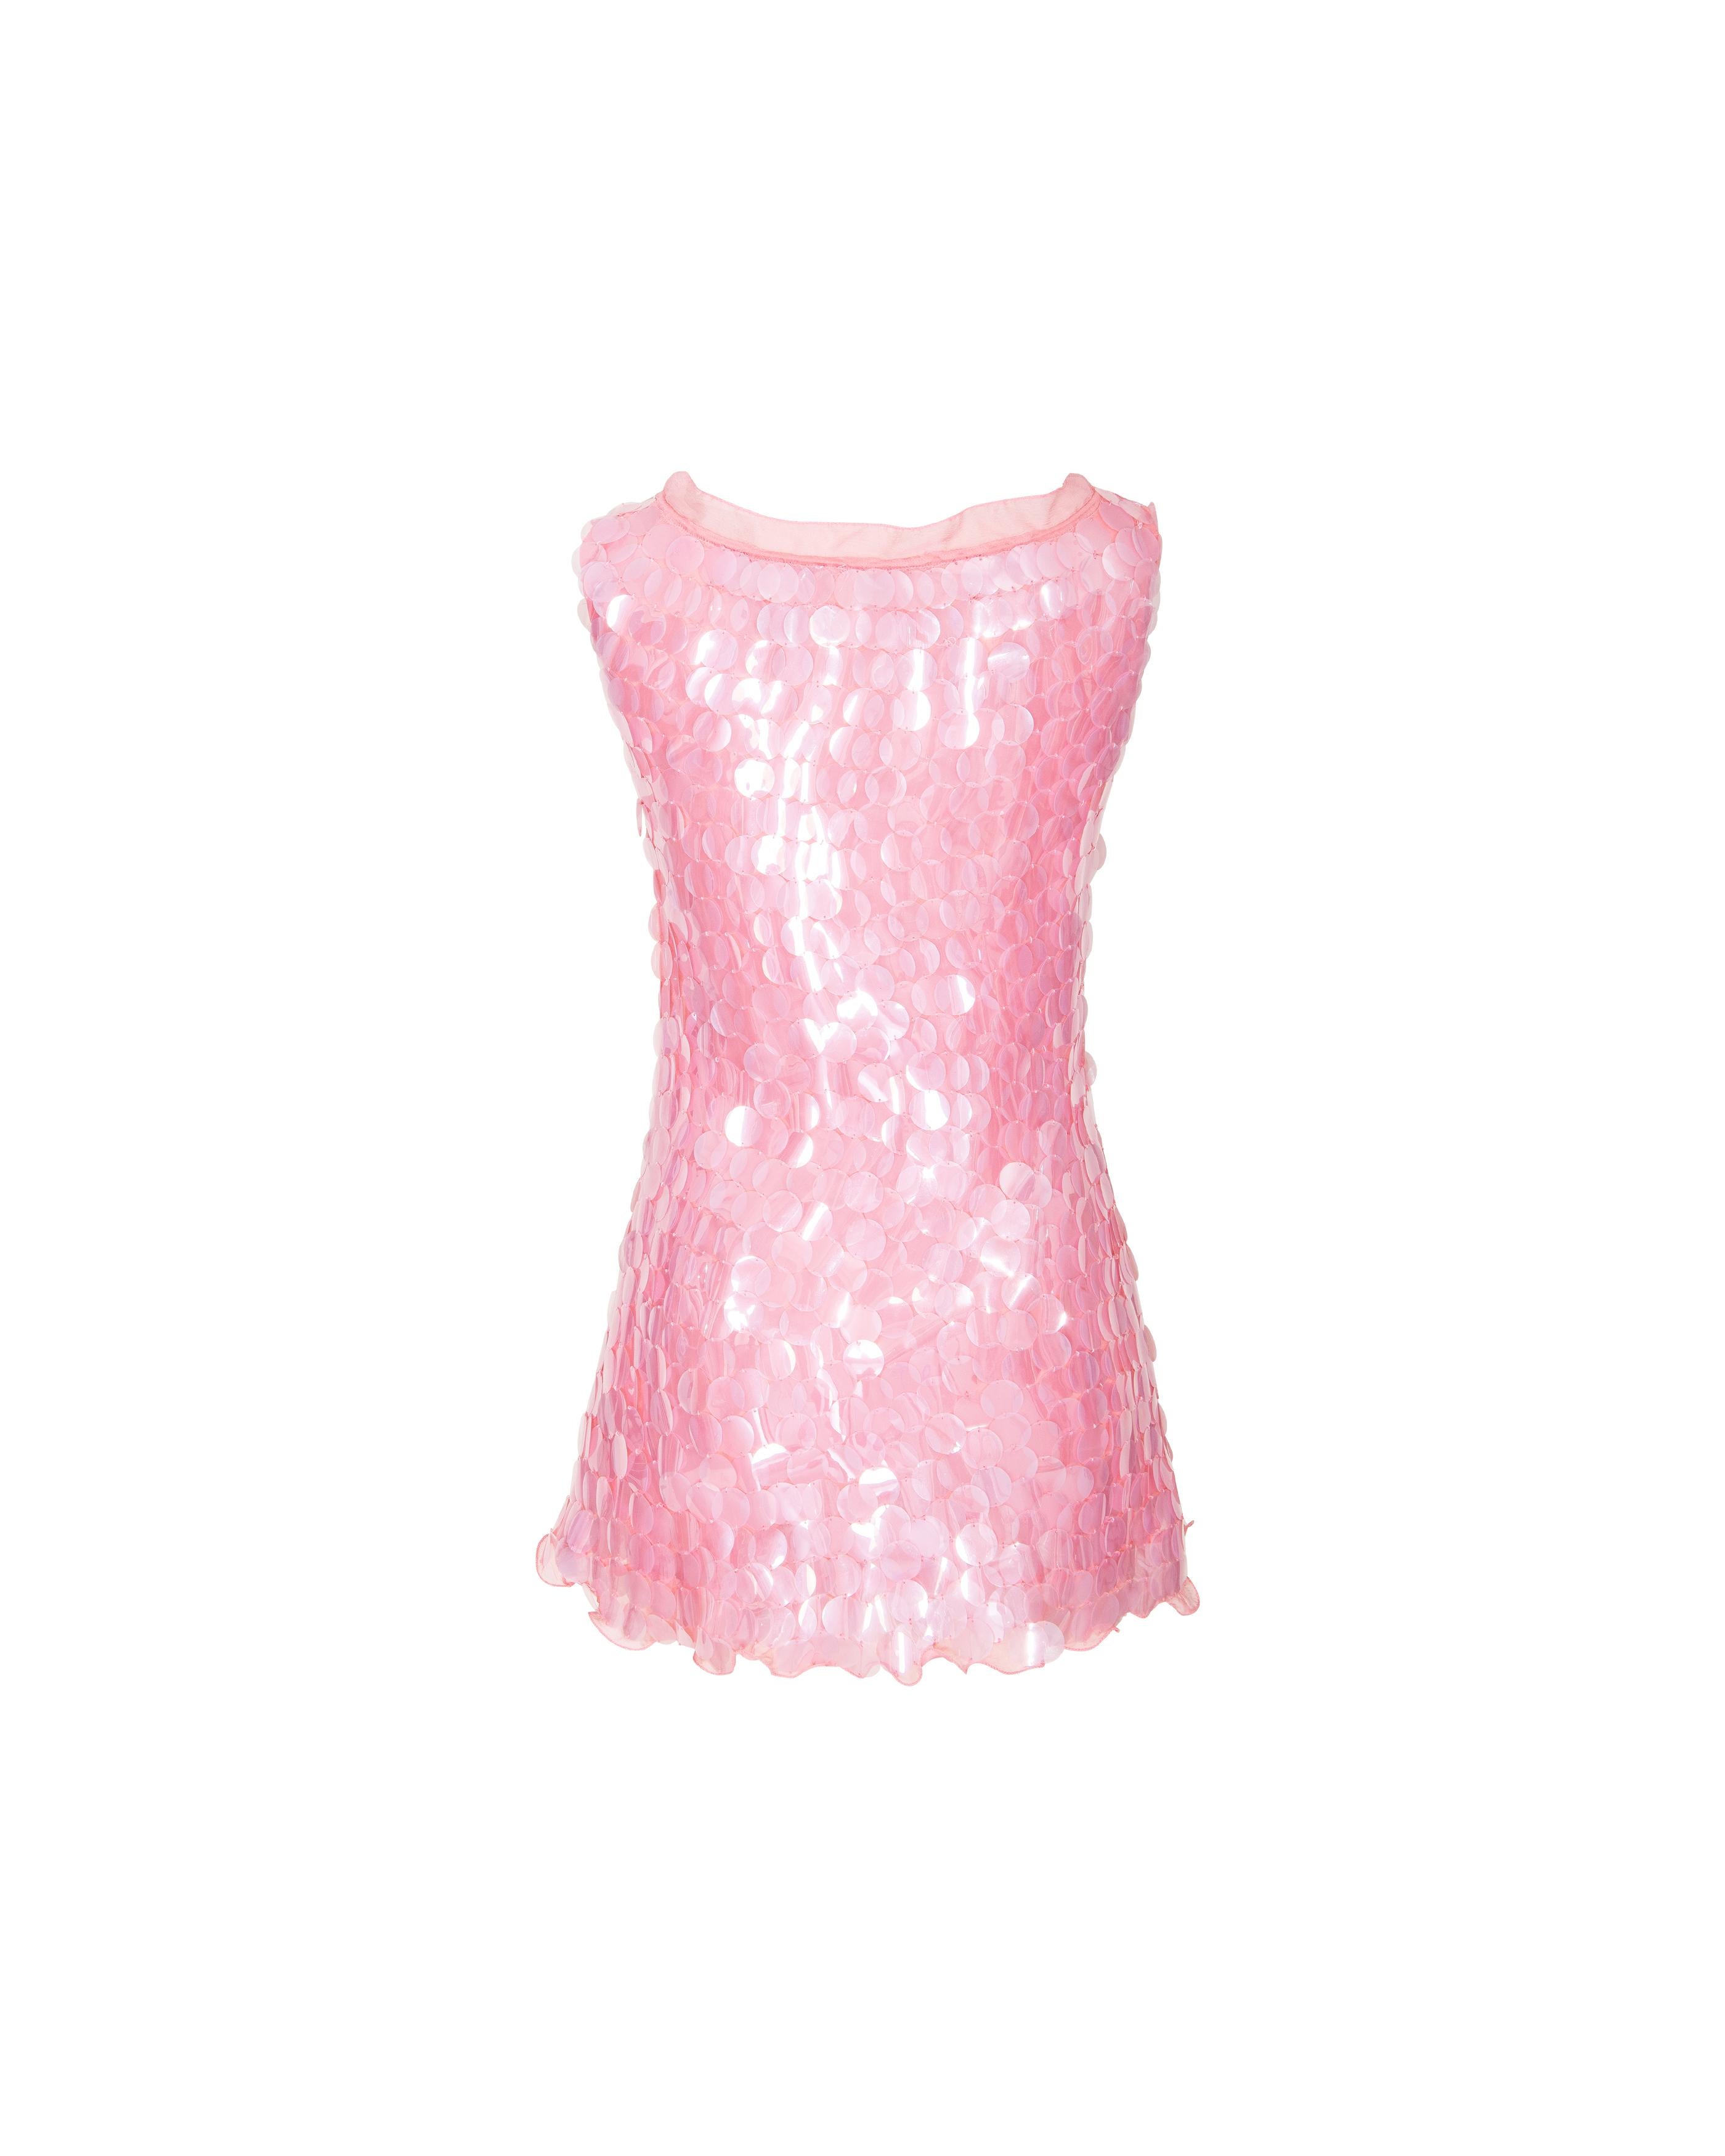 Women's c. 1999 Prada by Miuccia Prada Pink Paillette Mini Dress